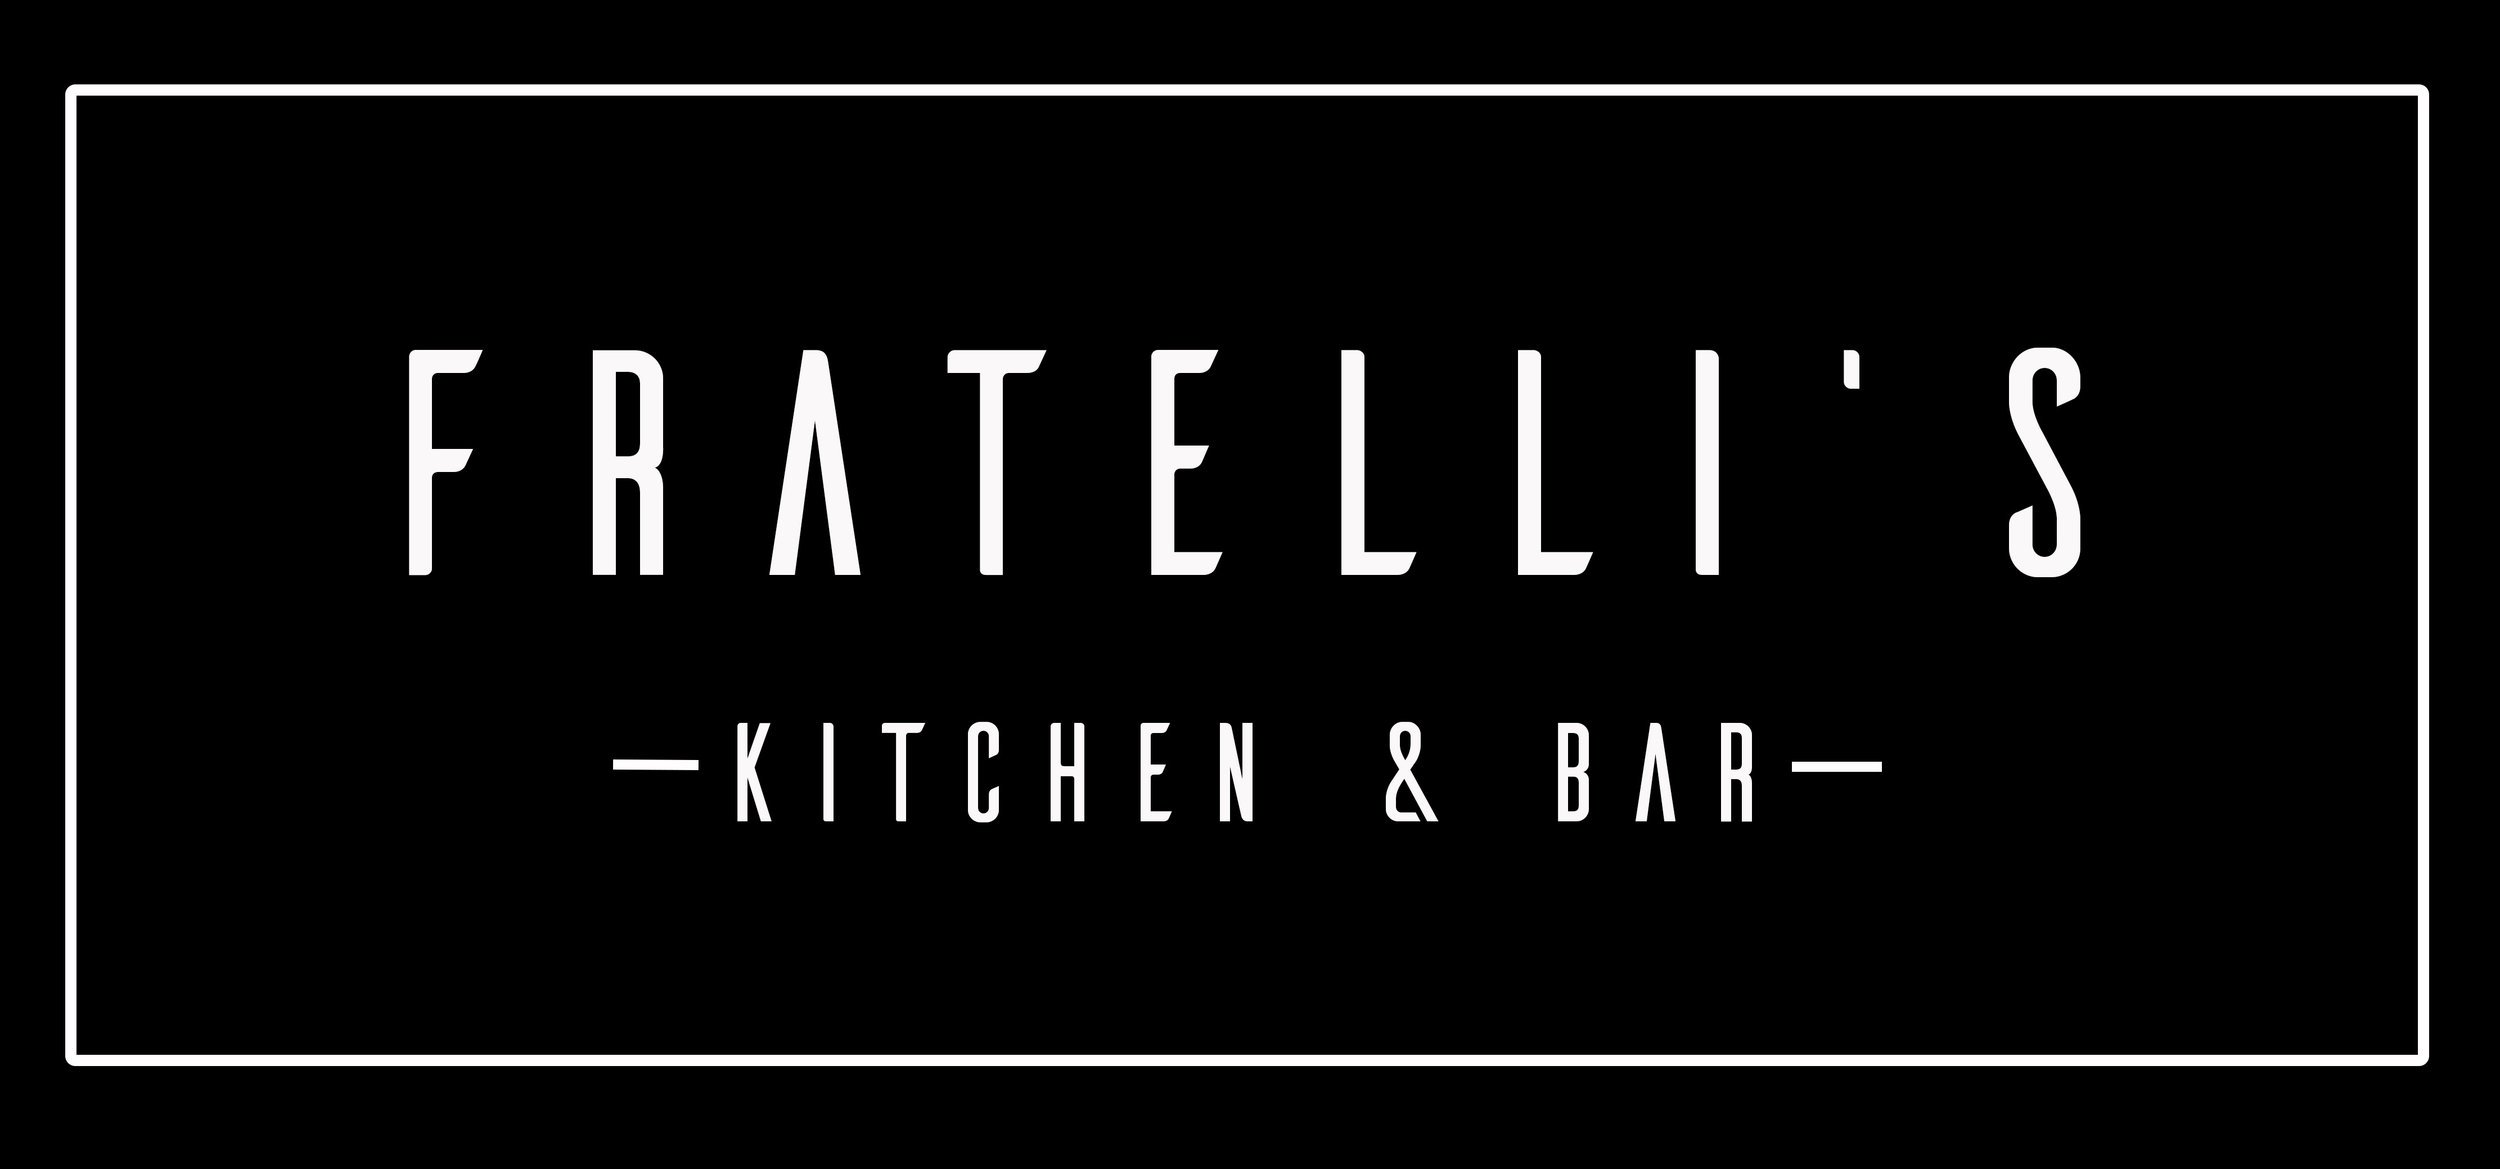 Fratellis+kitchen+and+bar+logo+1+copy.jpg